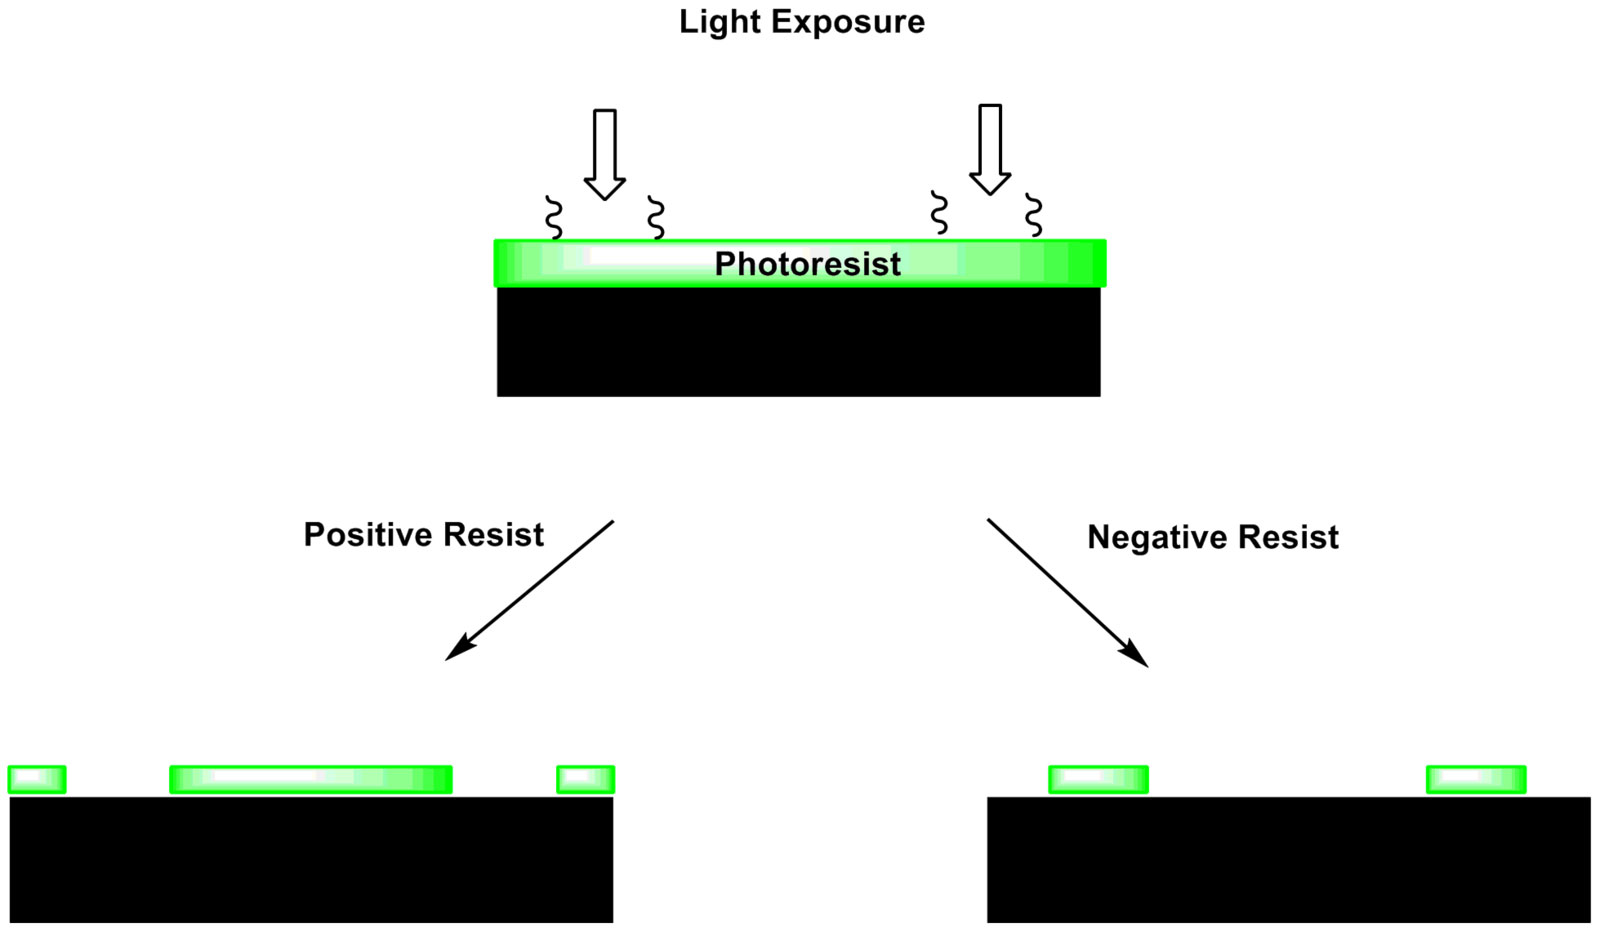 Photoresist development after light exposure